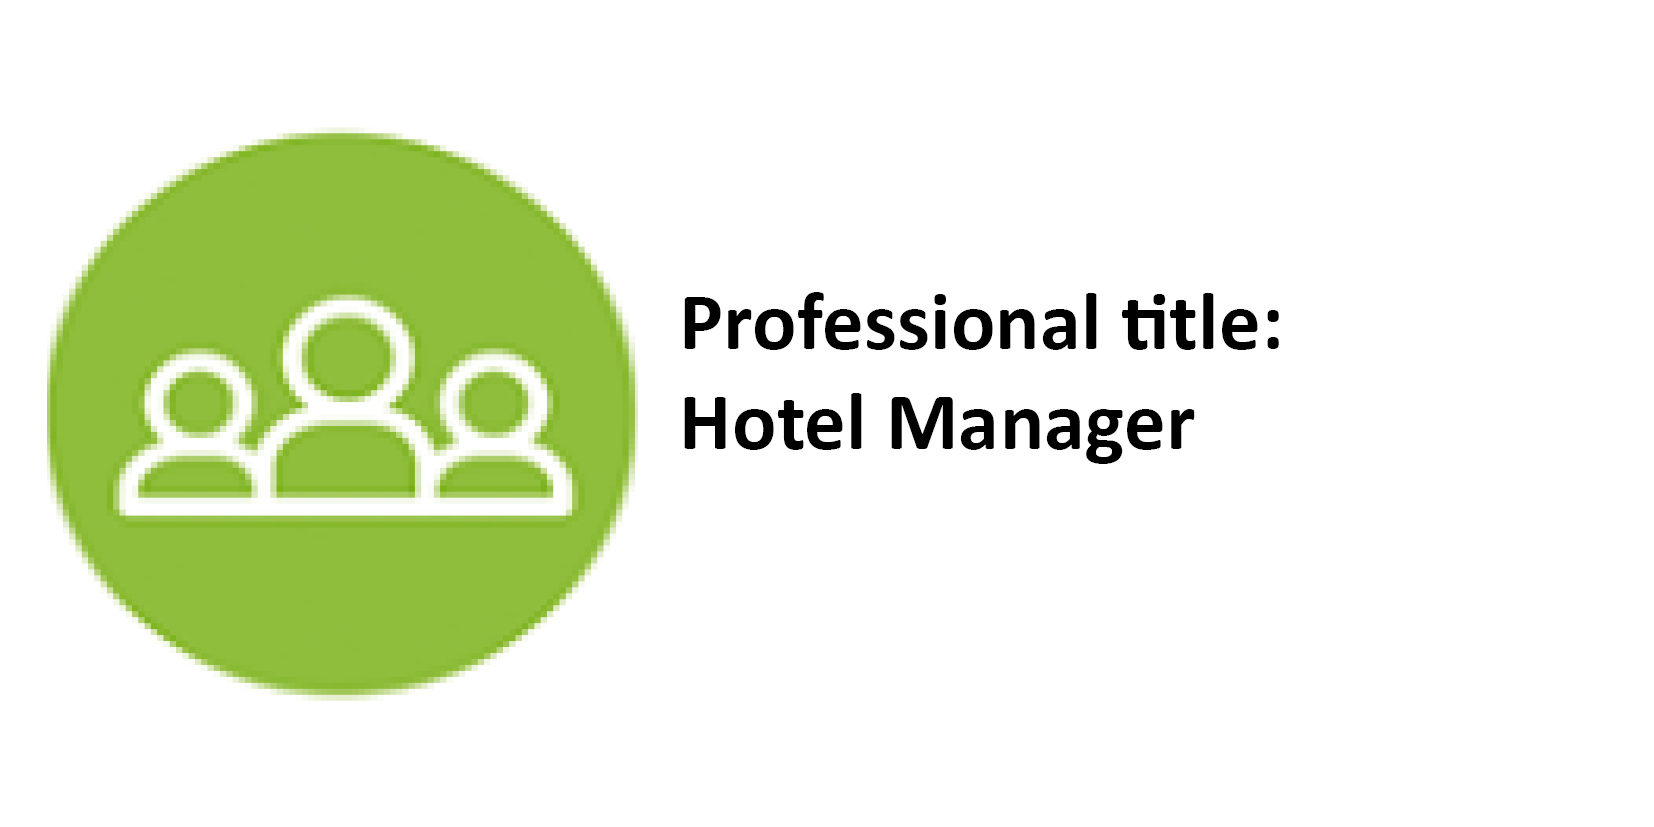 Master of International Hotel Management at ICHM Australia